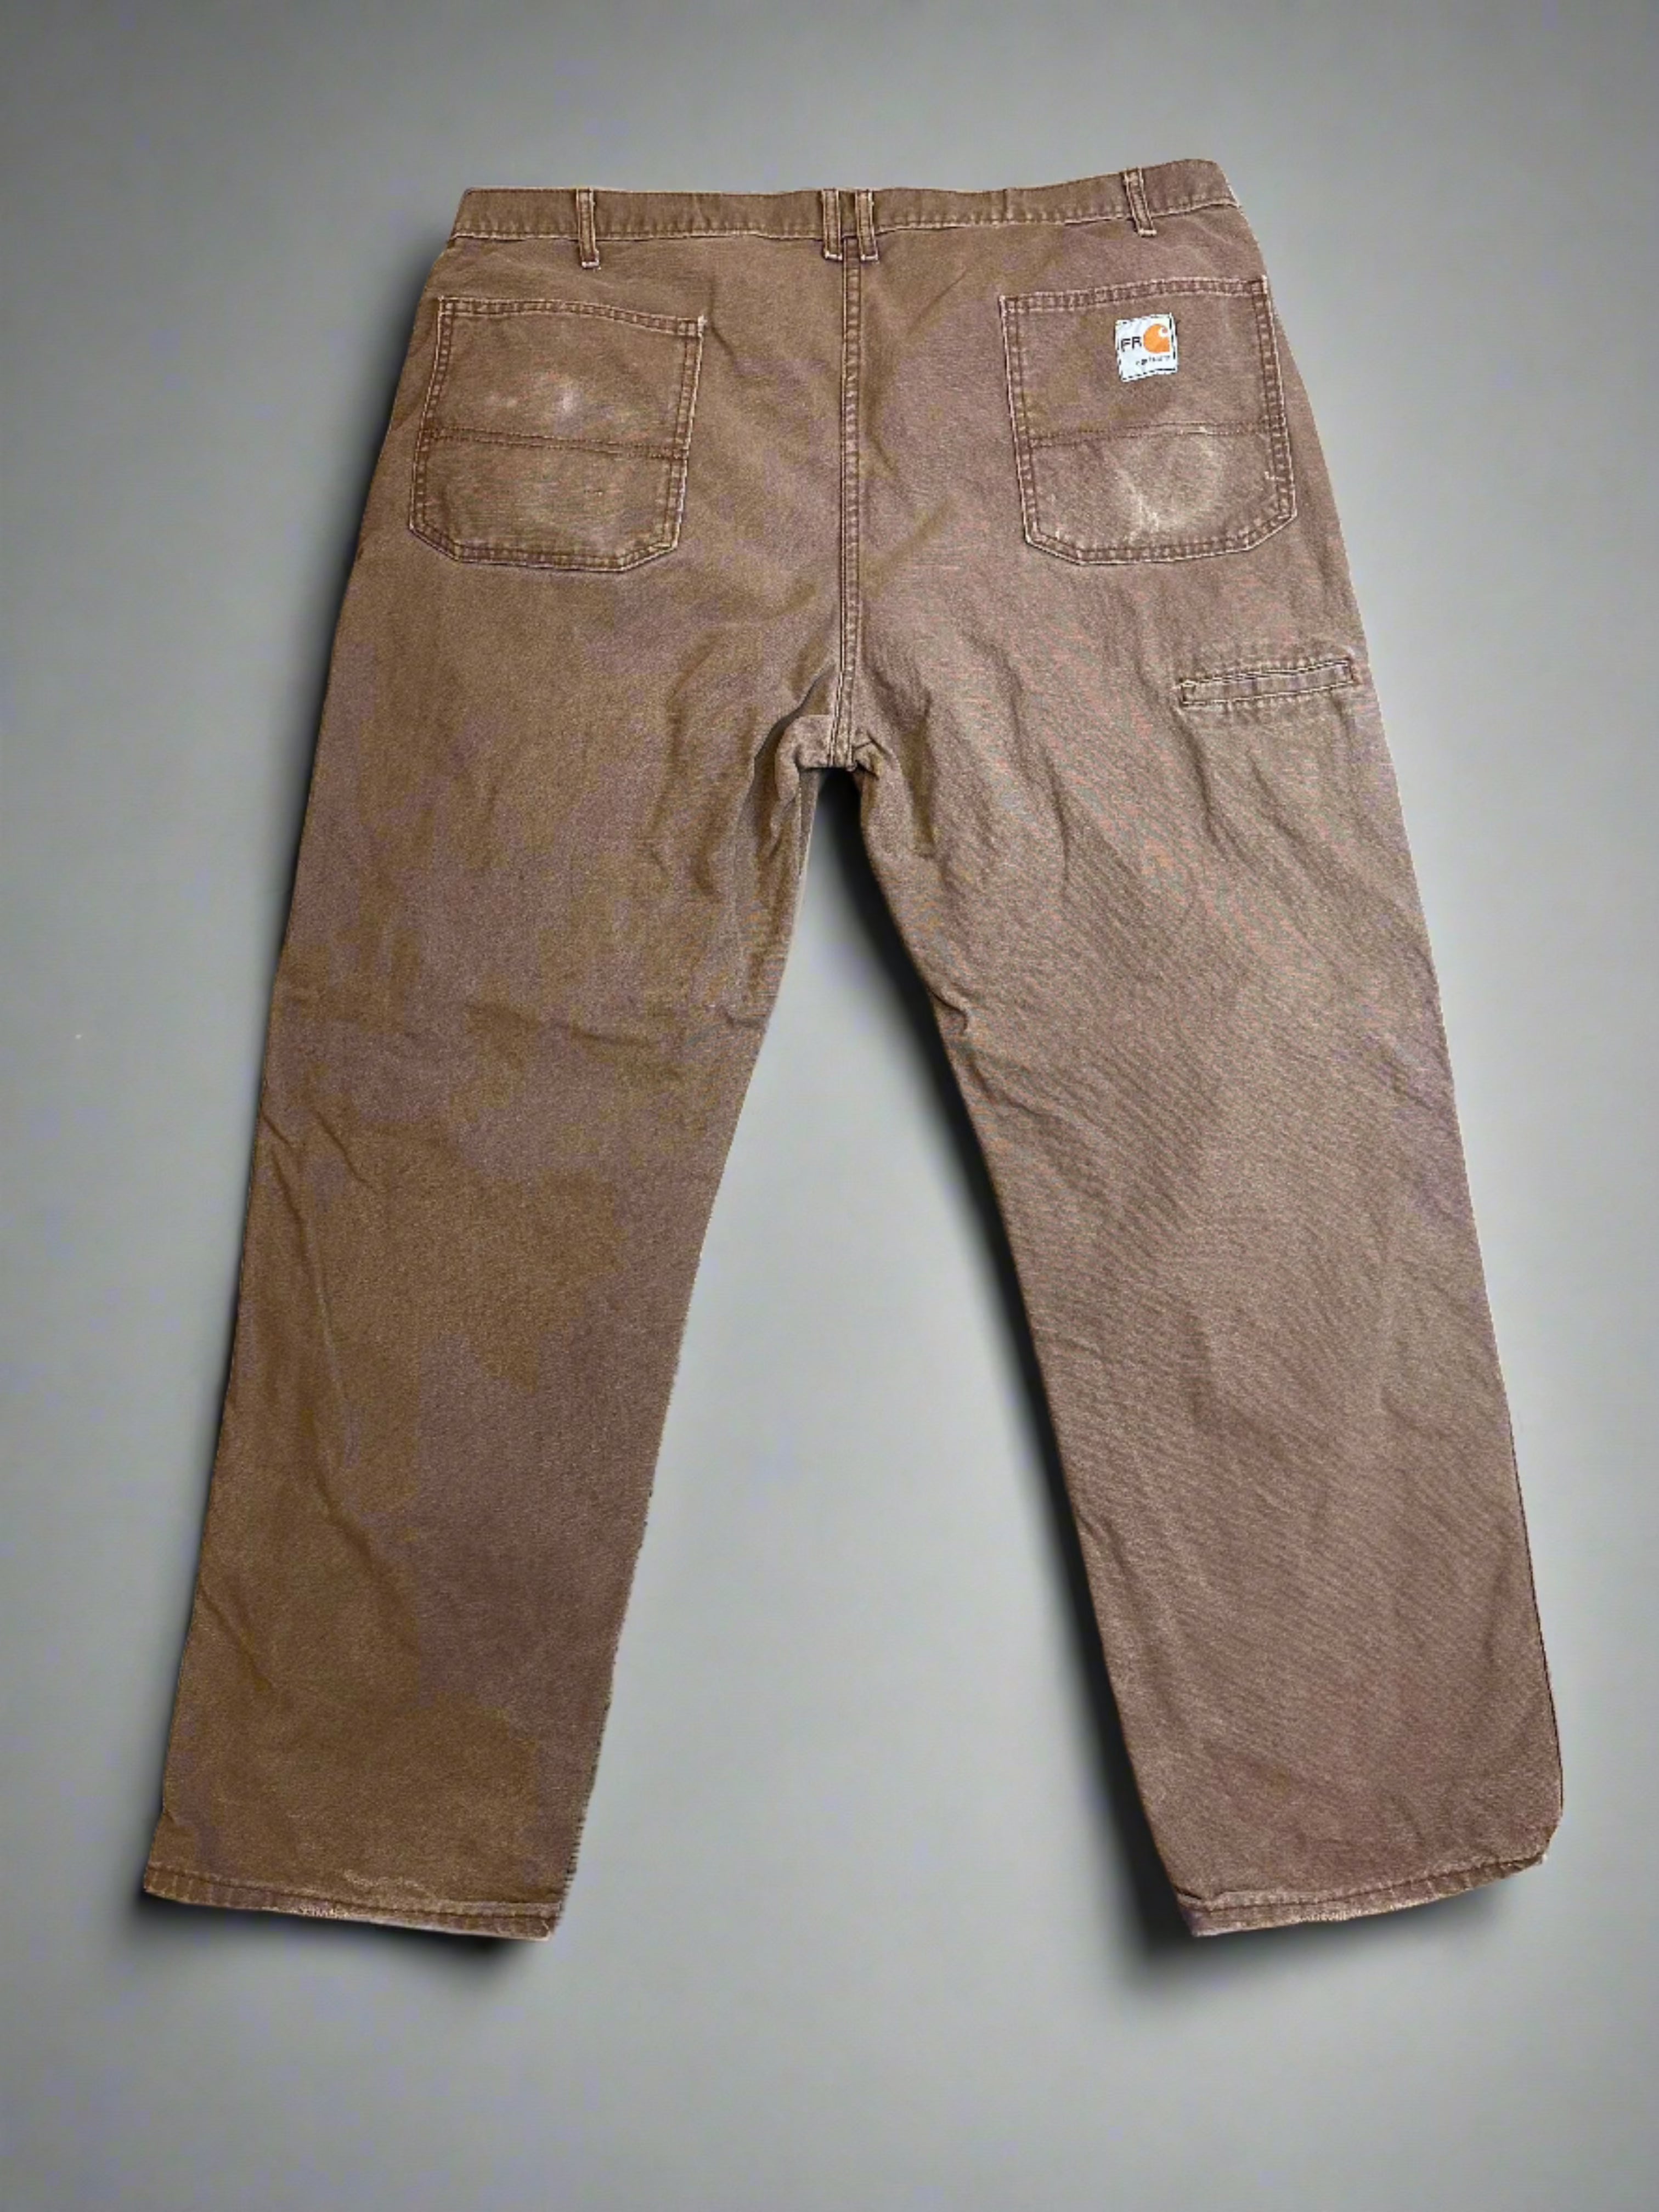 Vintage Carhartt Carpenter Pants - 42x32 size